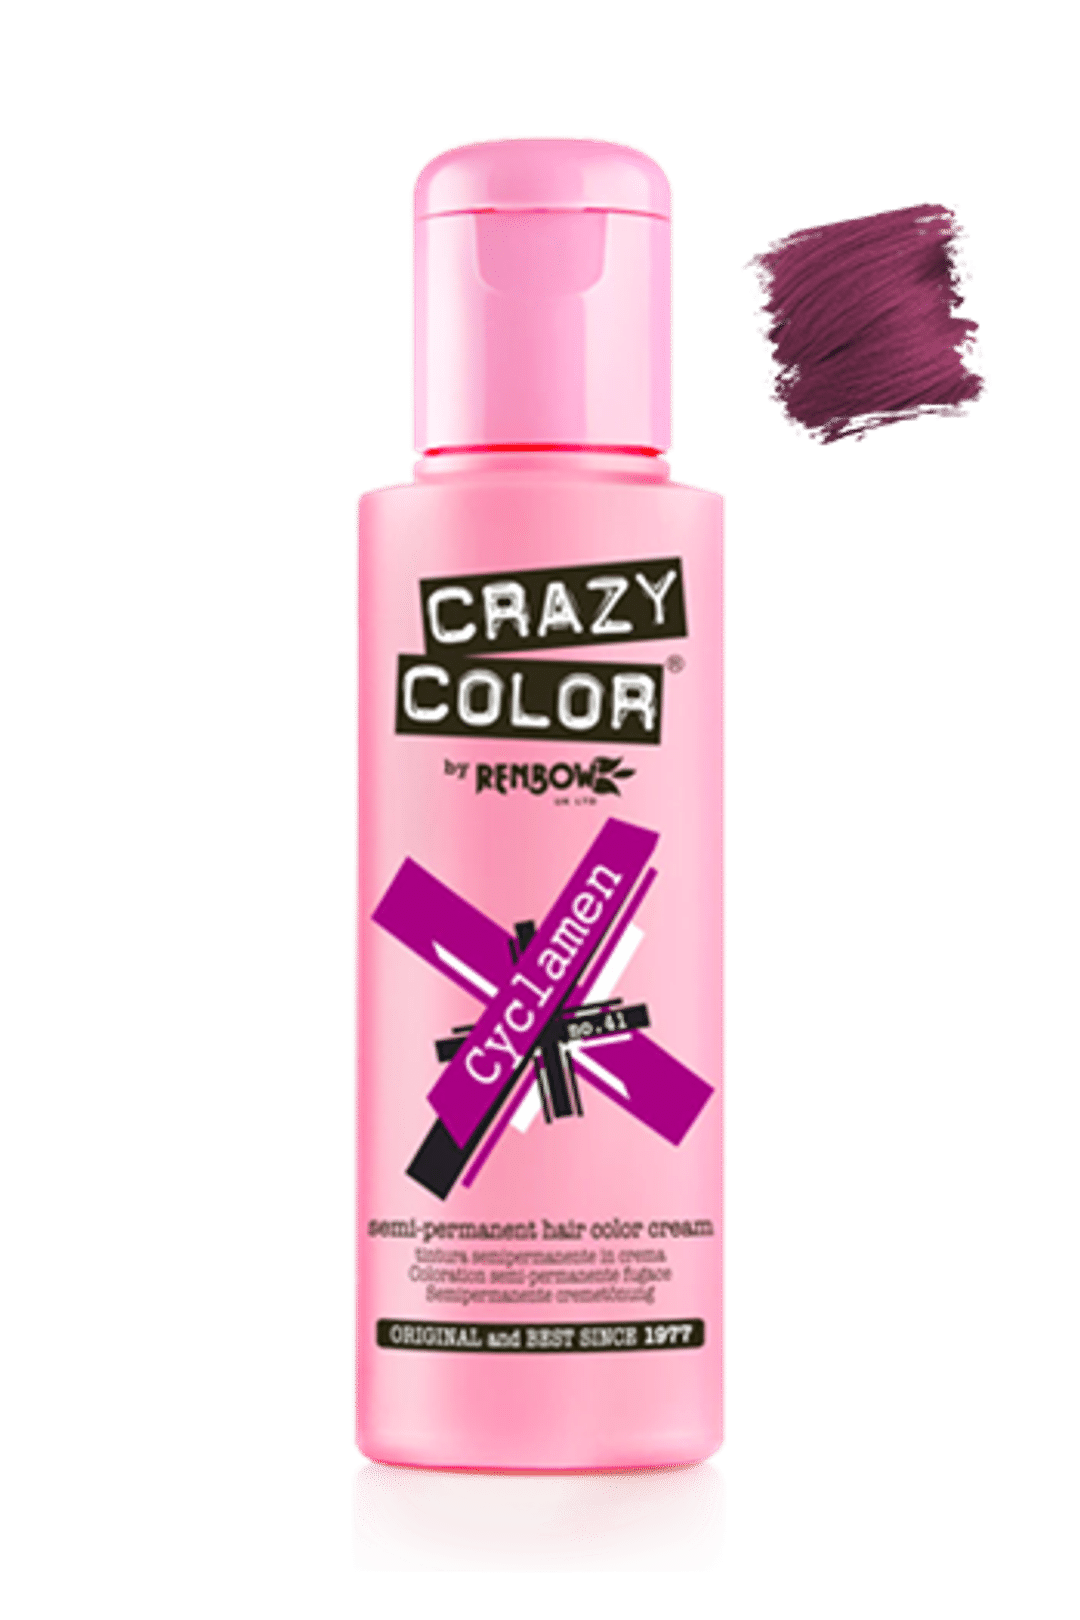 Crazy Color Semi Permanent Hair Color Cream - Cyclamen